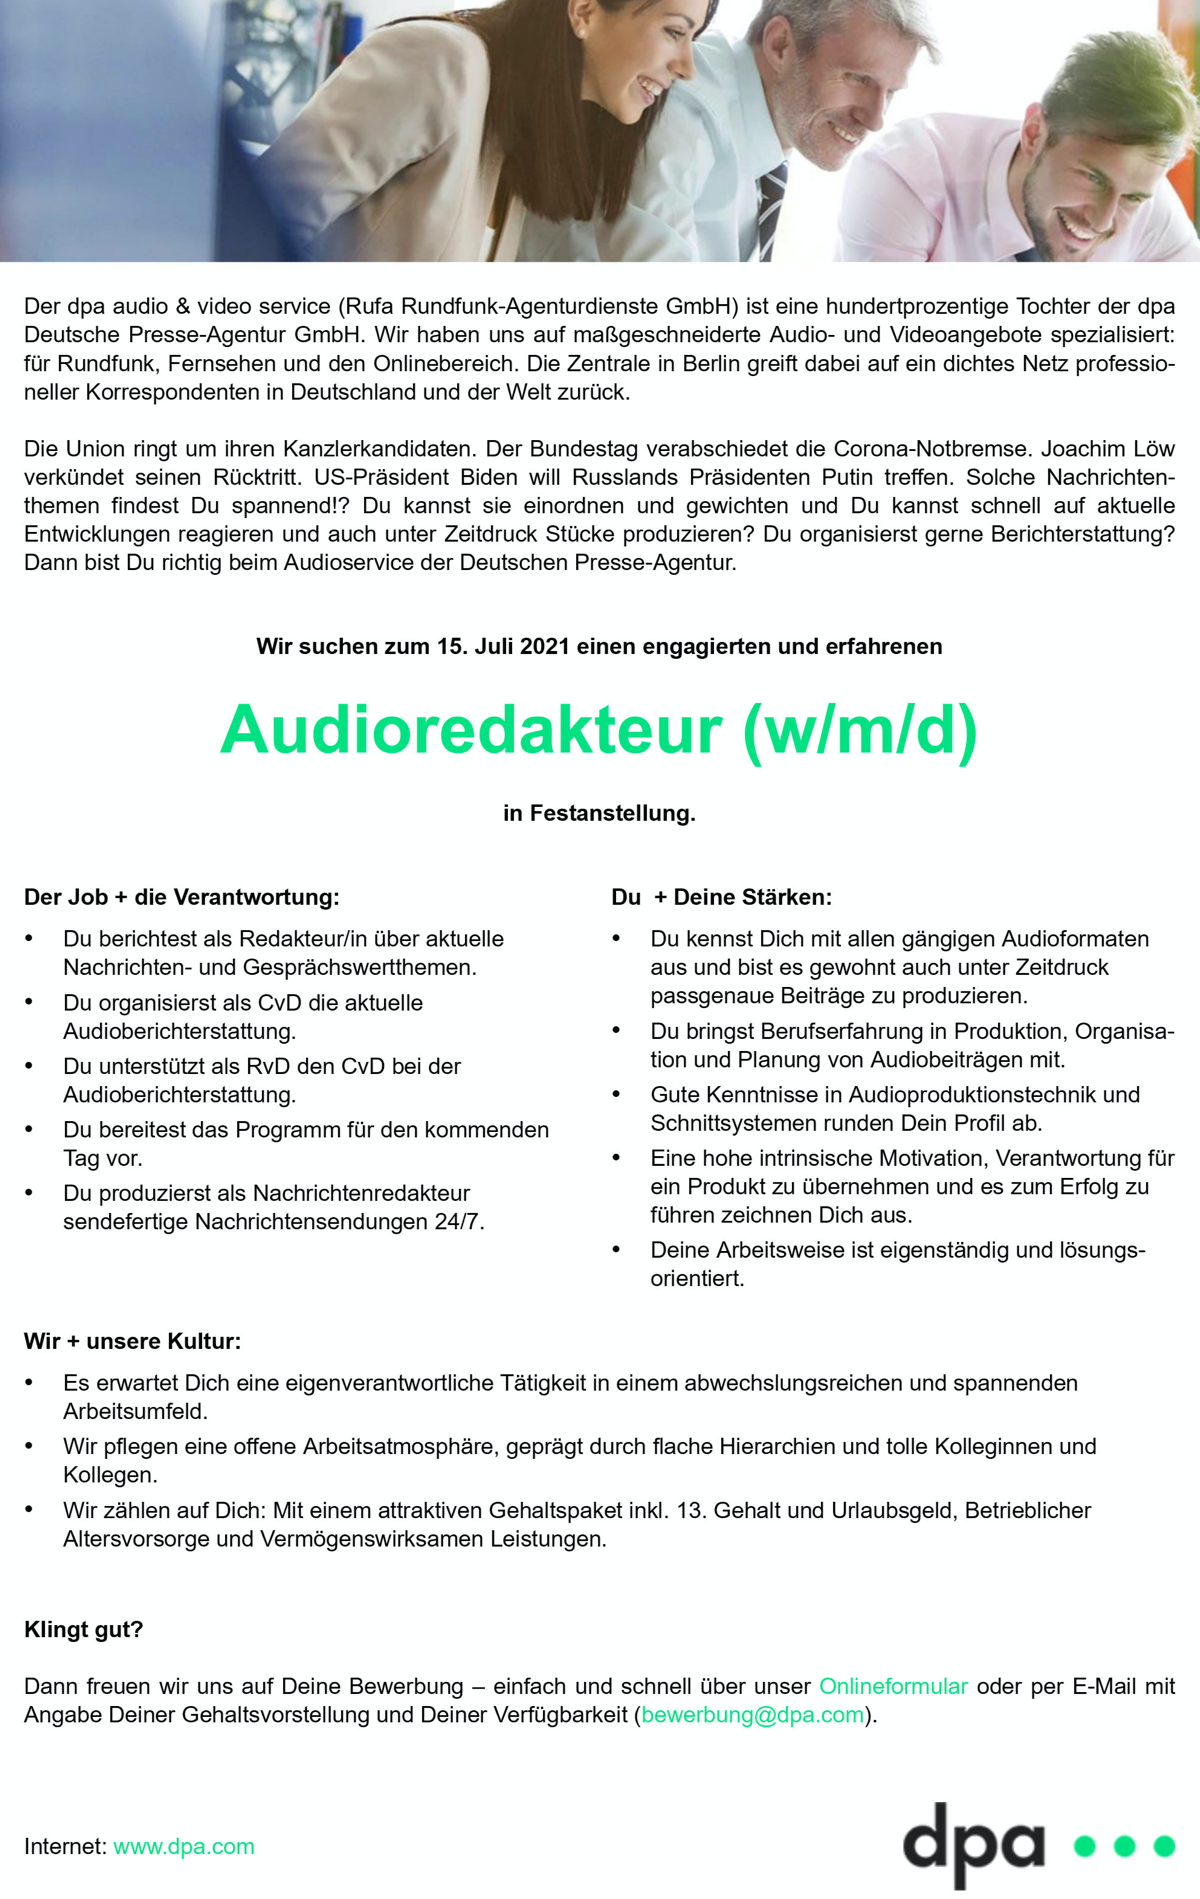 dpa audio & video service Audioredakteur (w/m/d)